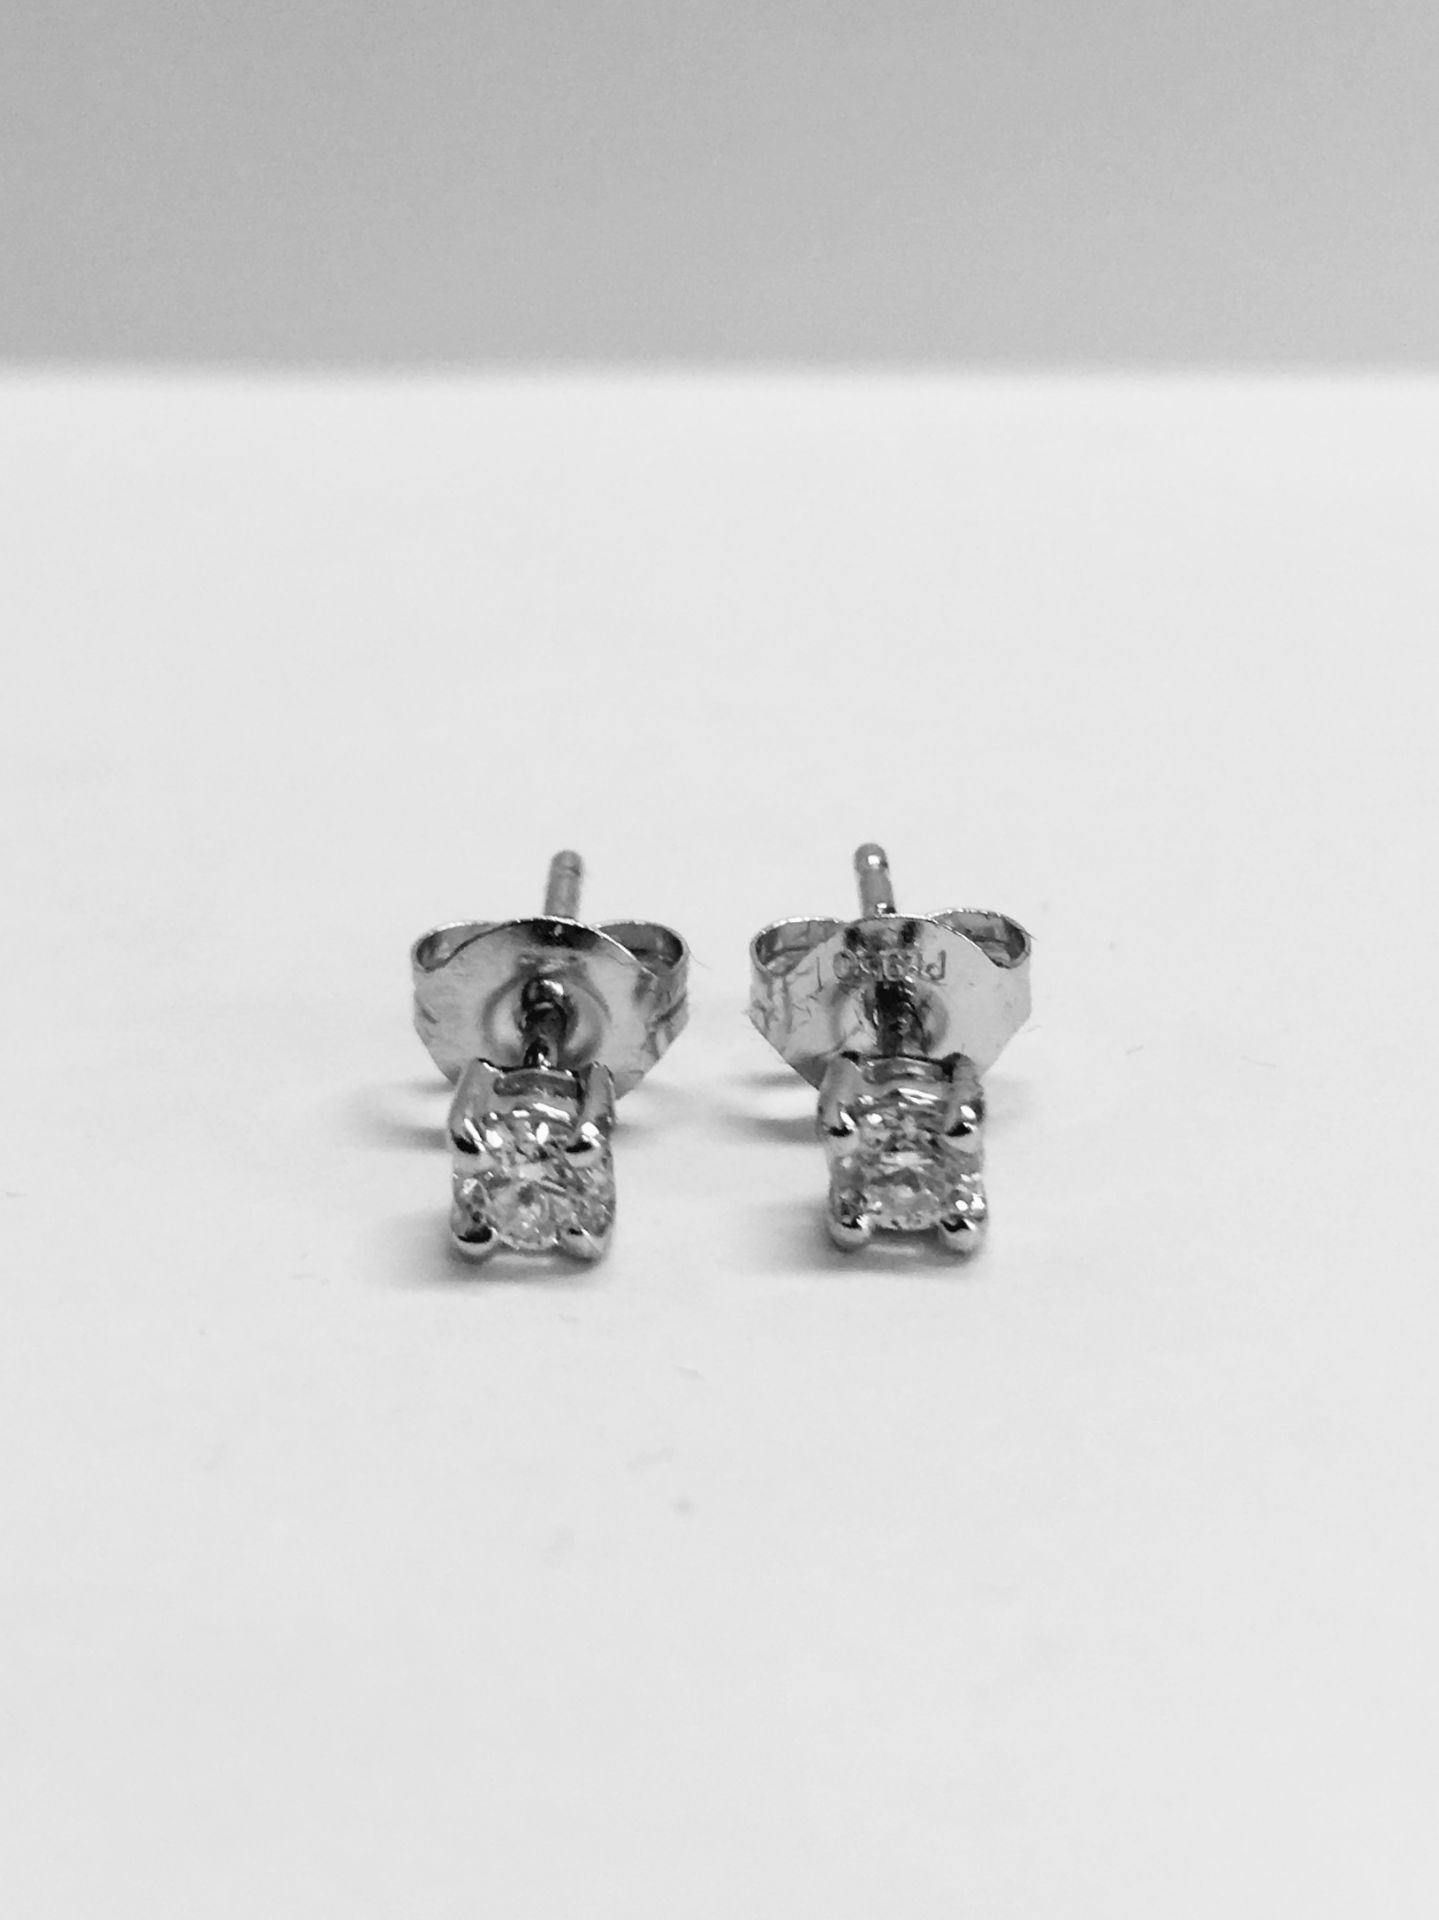 0.30ct diamond solitaire stud earrings set in platinum 950. Brilliant cut diamonds I colour, si2